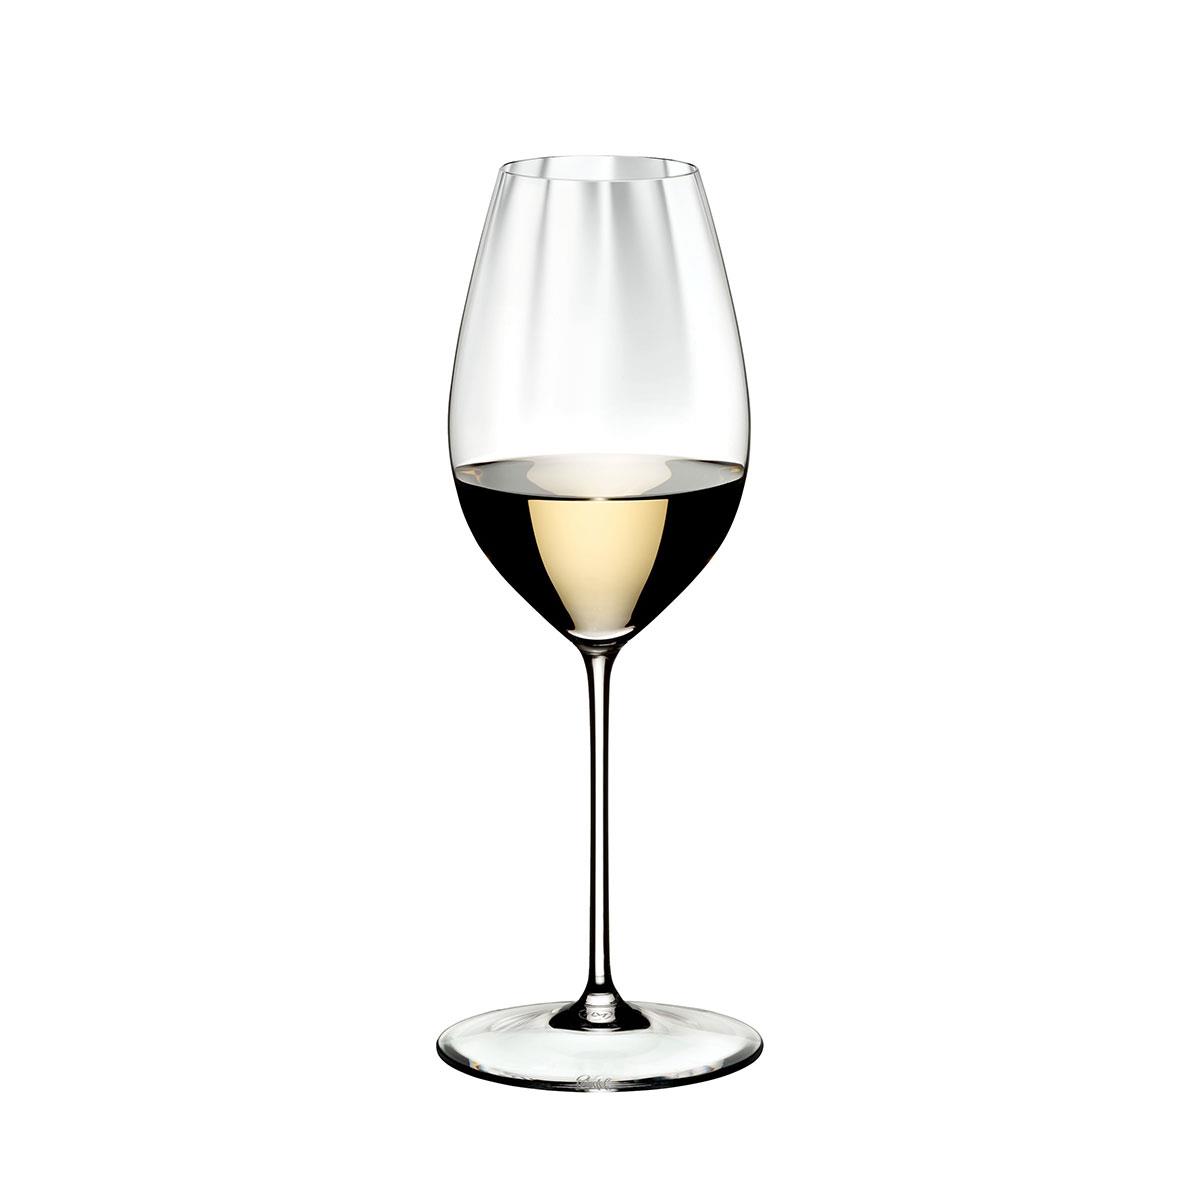 Riedel ποτήρι απο κρύσταλλο Performance Sauvignon Blanc 6884/33, Σετ 2τμχ